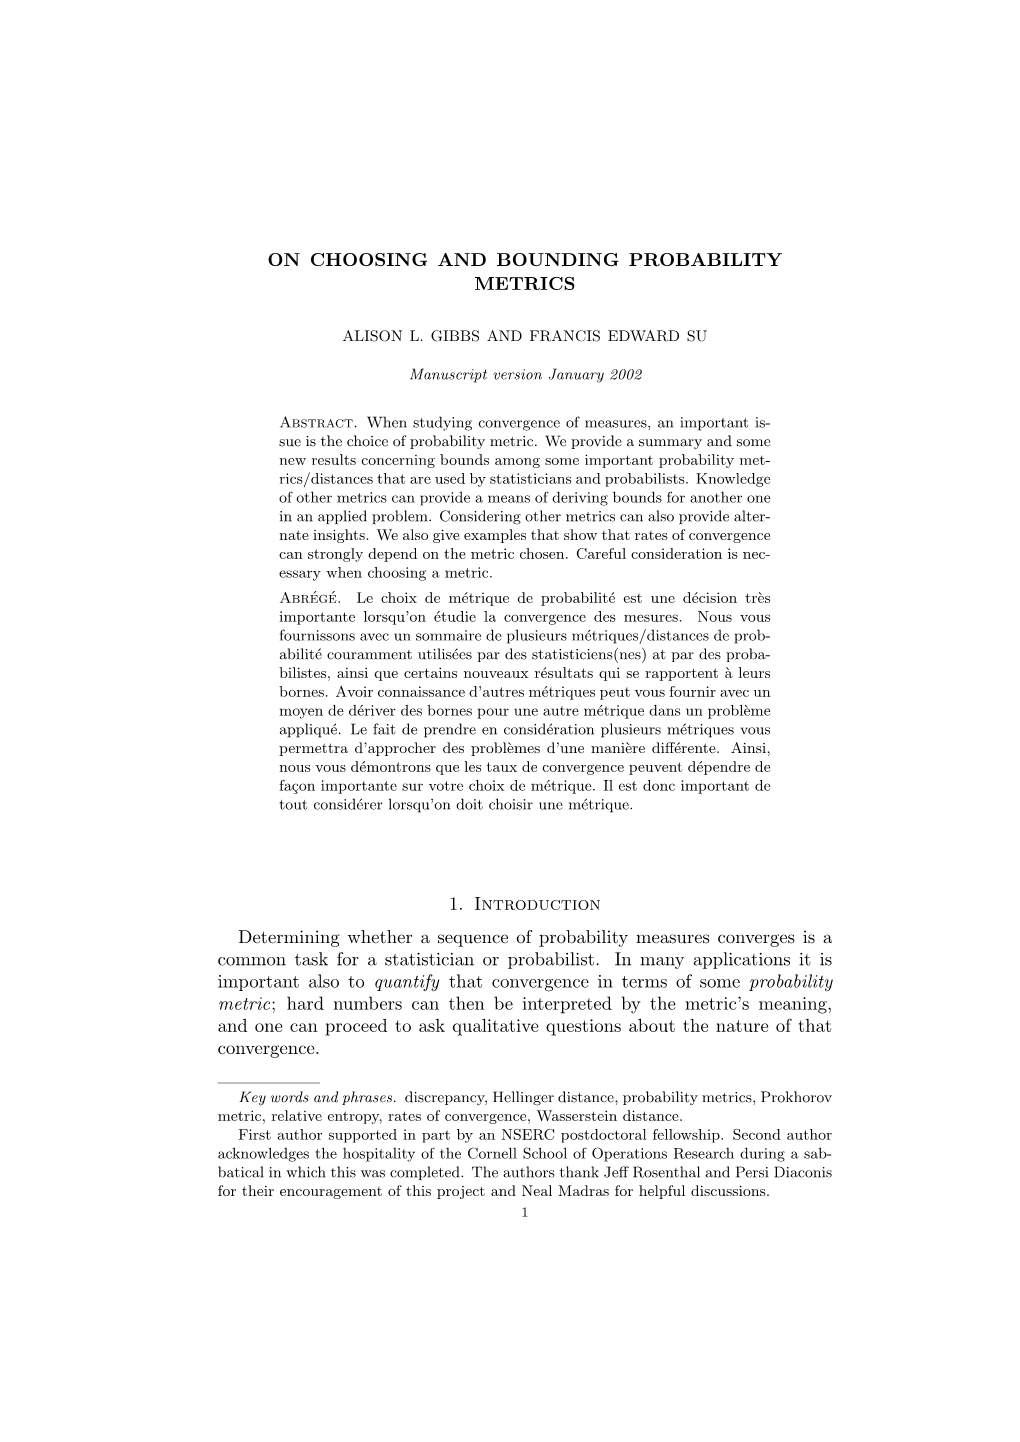 On Choosing and Bounding Probability Metrics 11